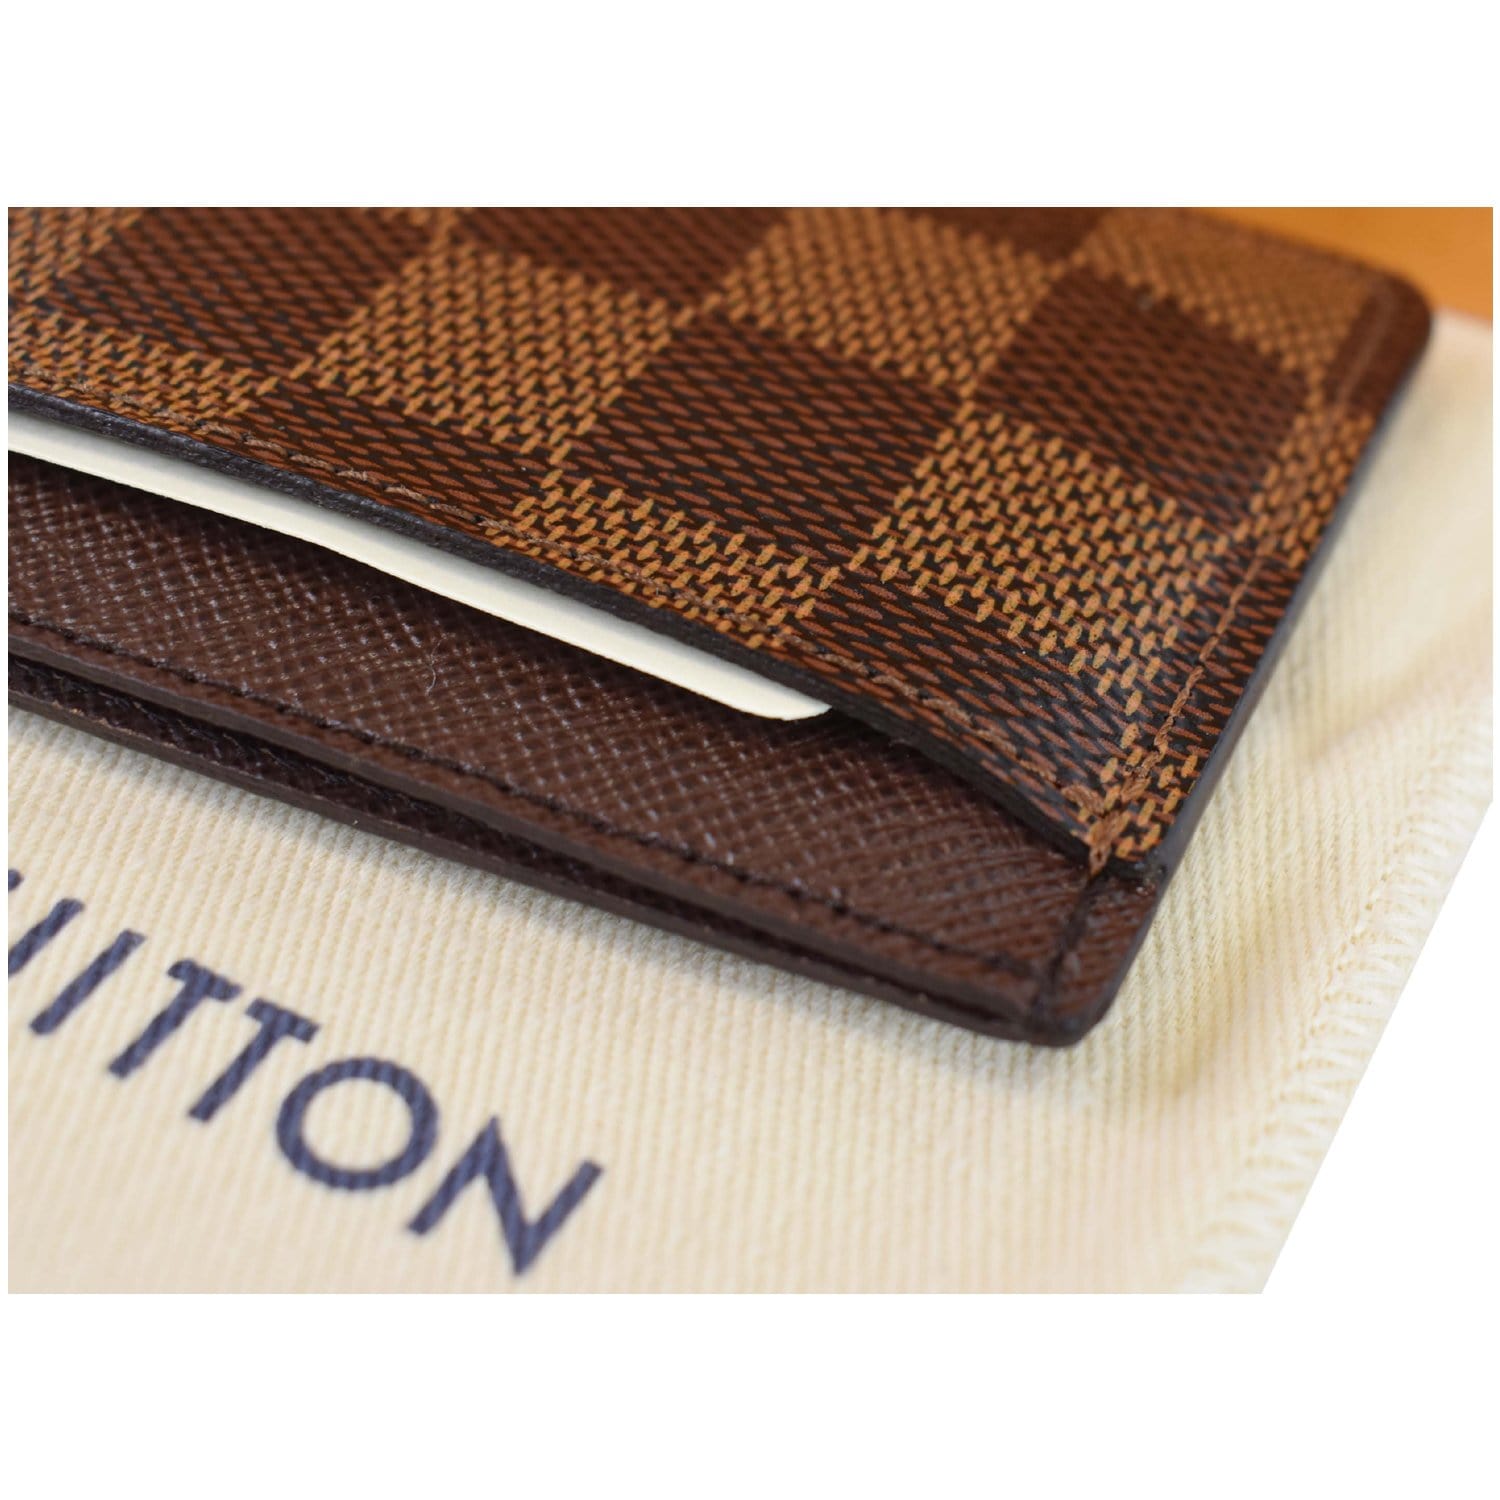 Louis Vuitton Damier Ebene Card Holder Brown For Women